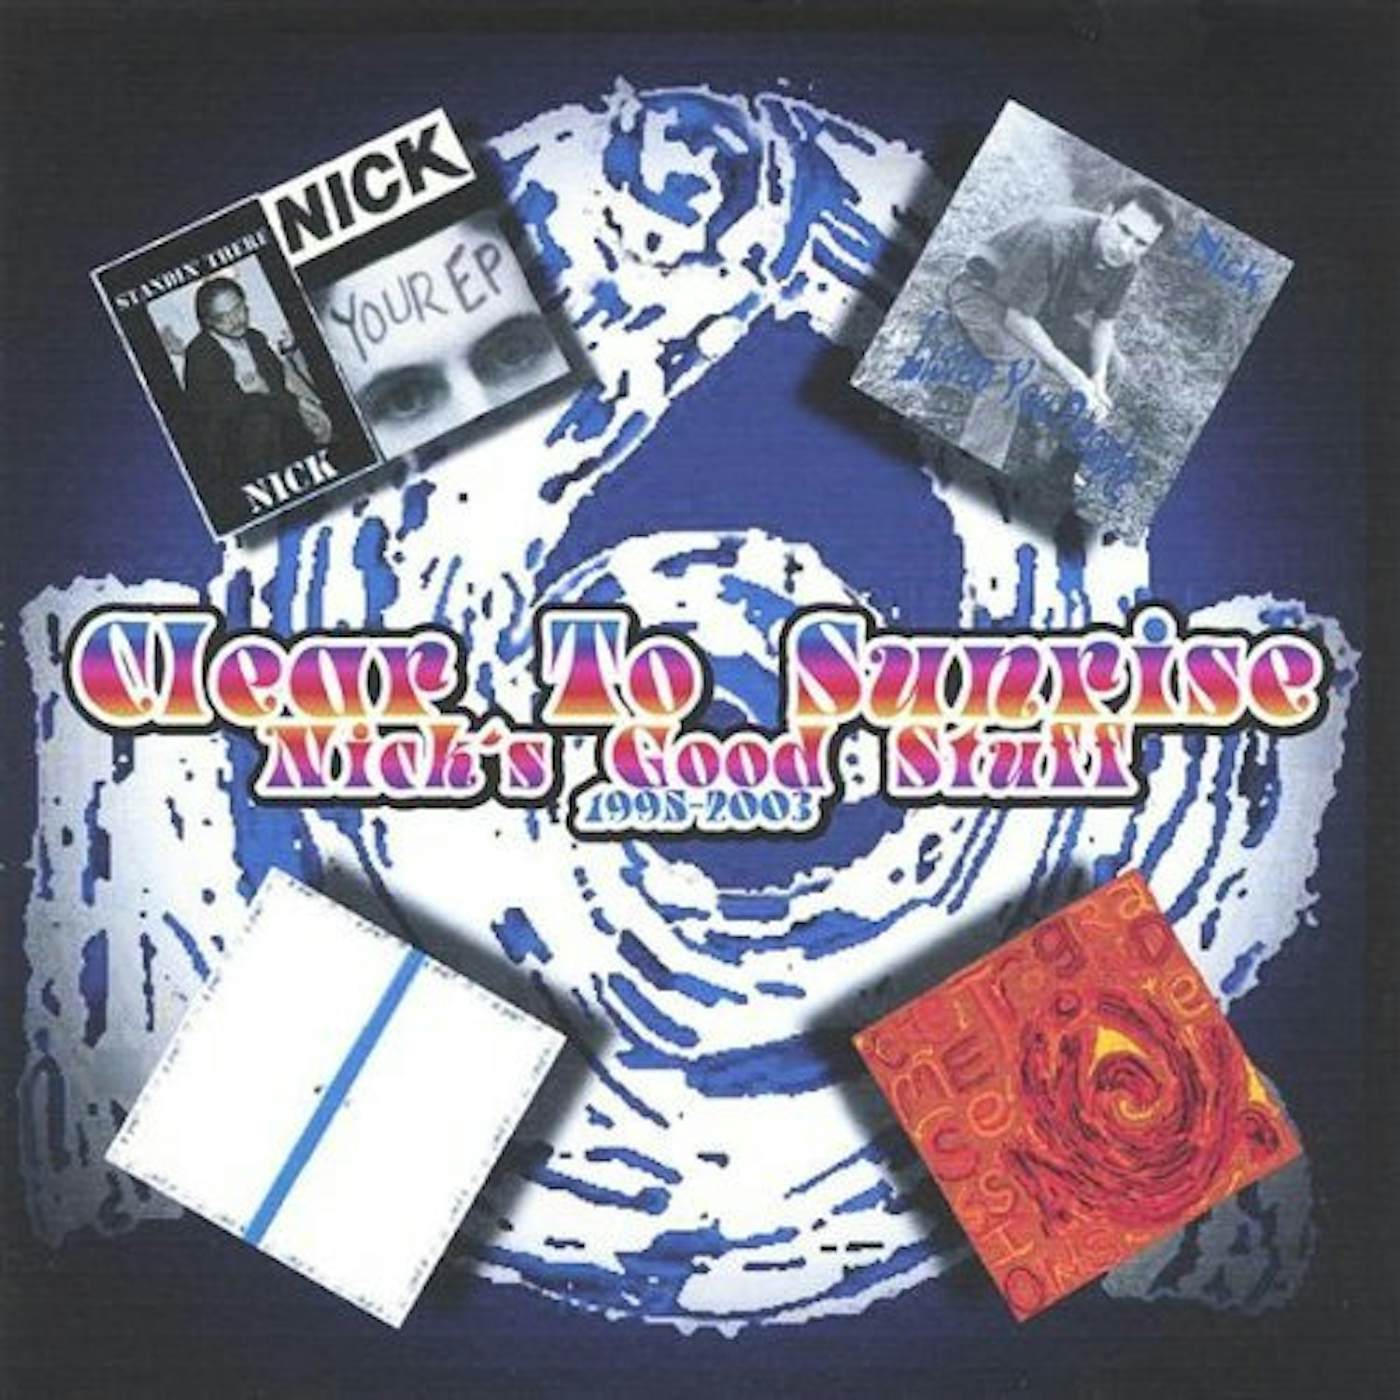 CLEAR TO SUNRISE-NICK'S GOOD STUFF-1995-2003 CD